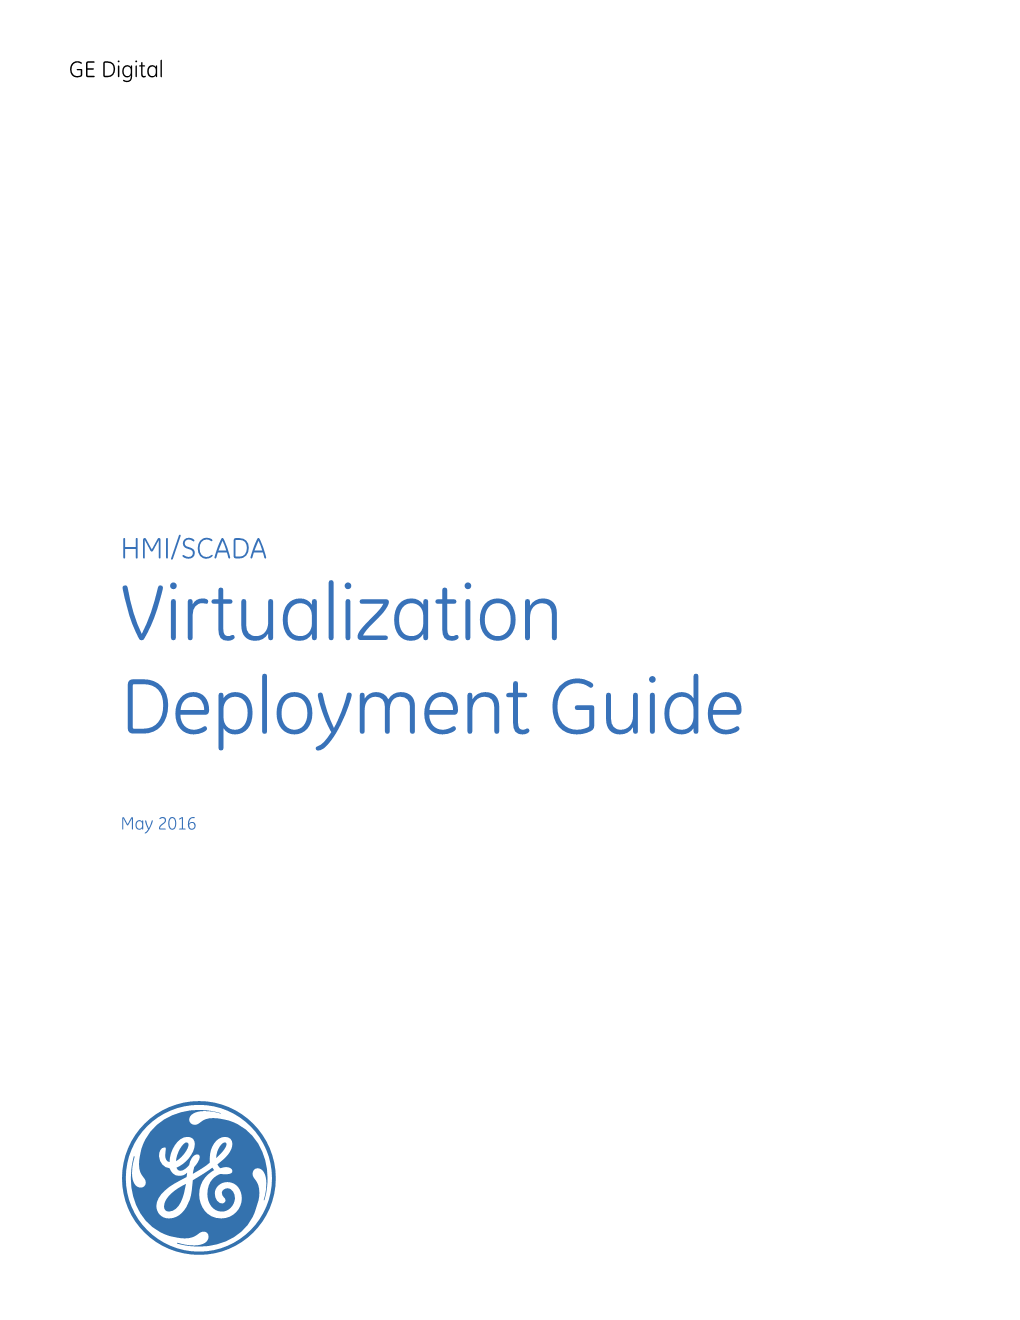 GE HMI/SCADA Virtualization Deployment Guide